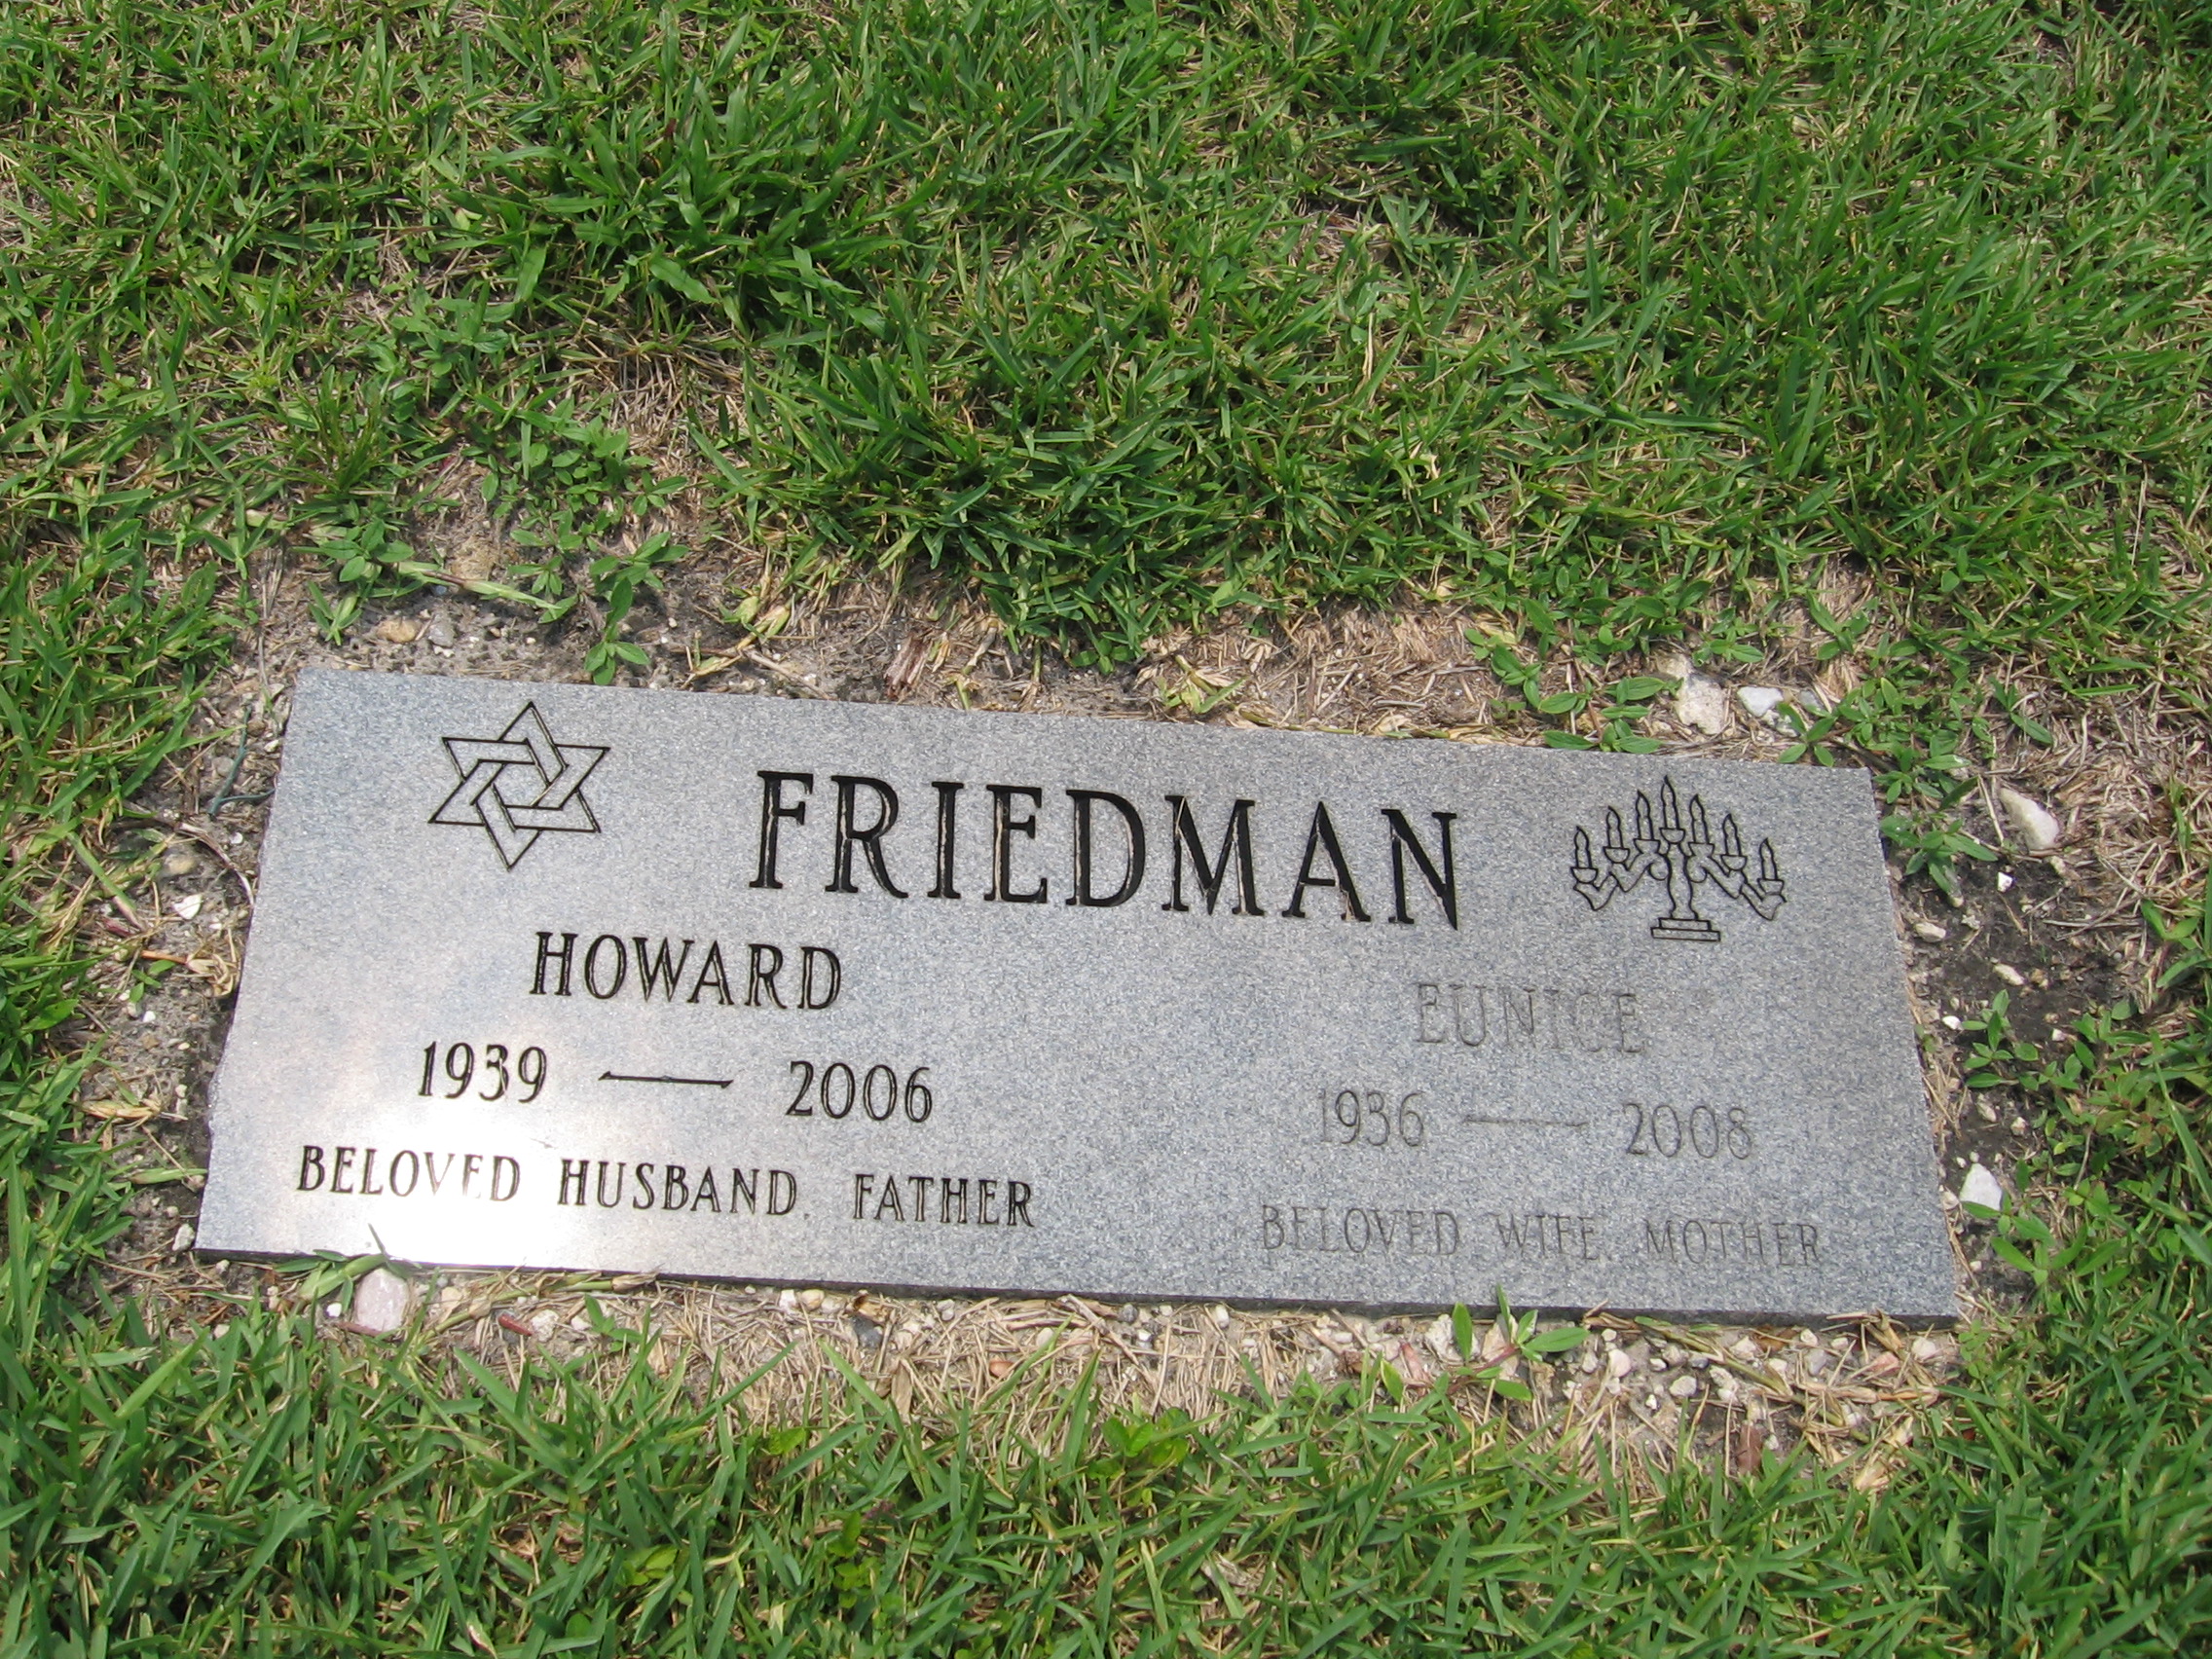 Howard Friedman